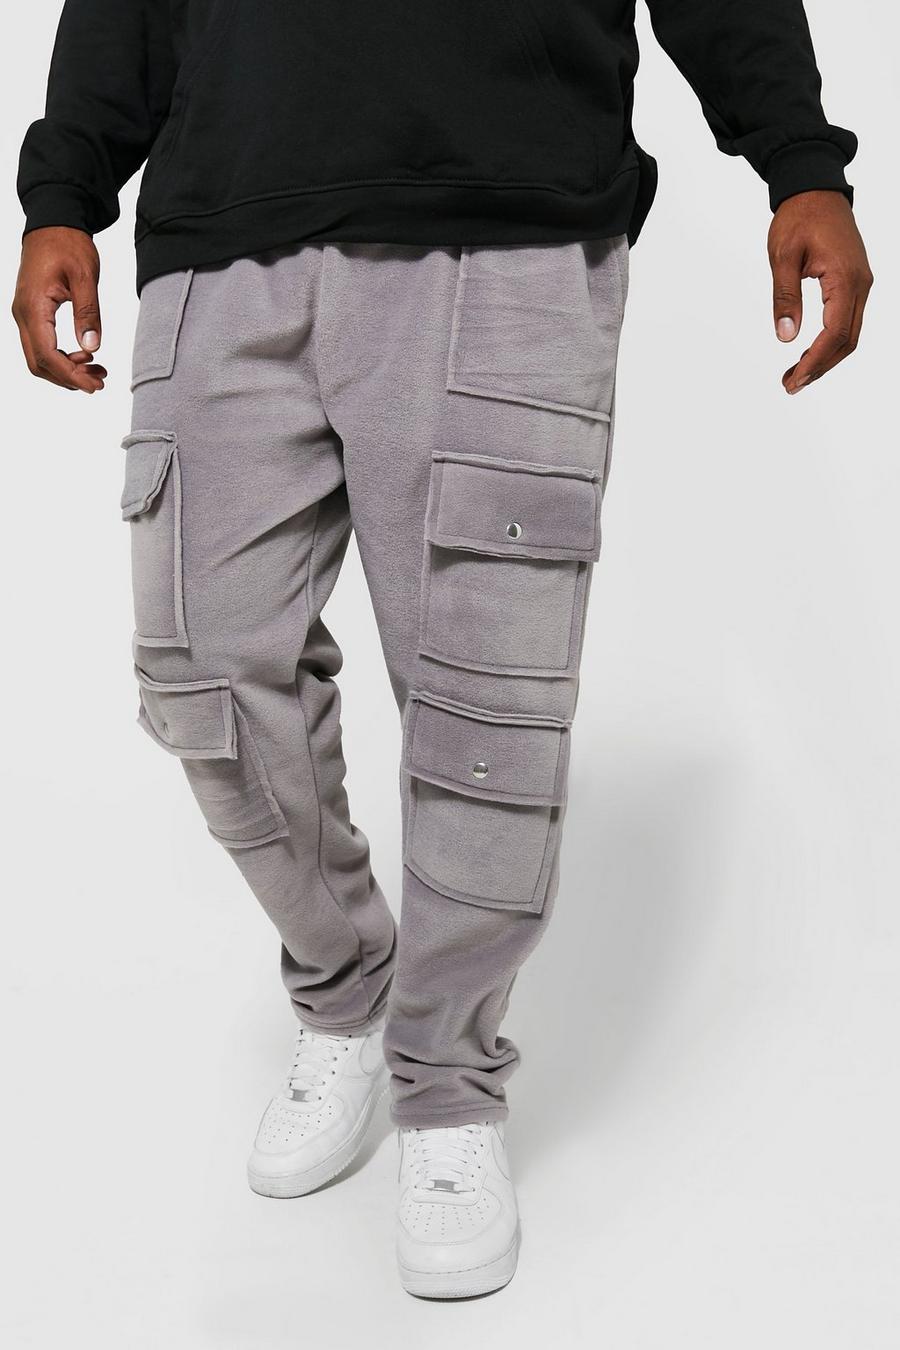 Pantaloni Plus Size in fleece polare con tasche Cargo, Grey grigio